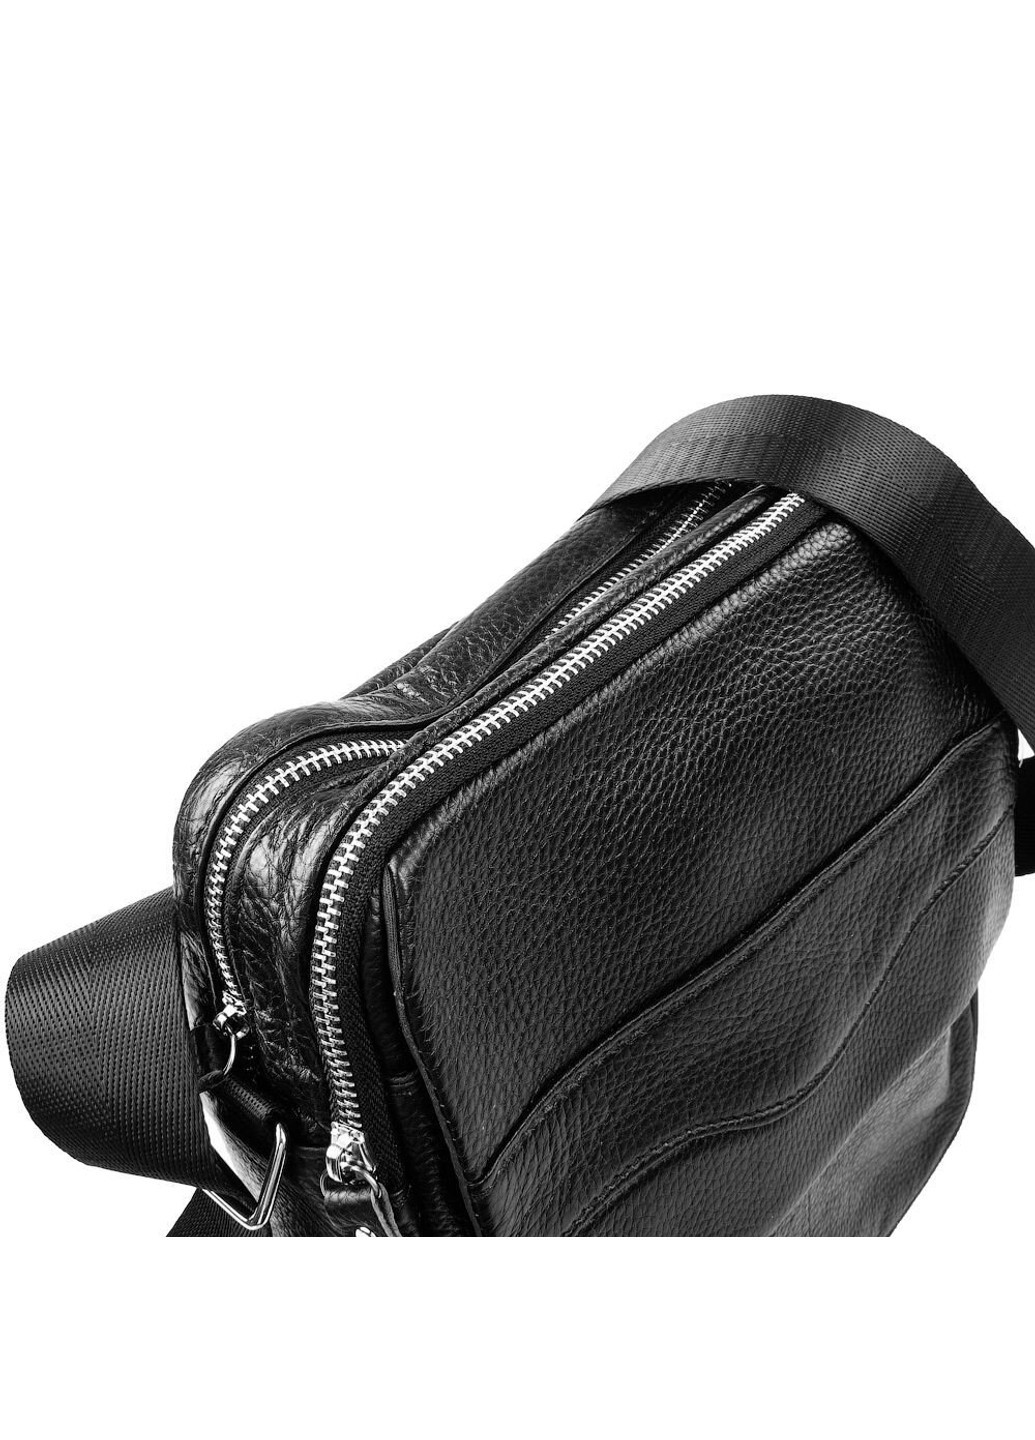 Мужская кожаная сумка-борсетка 3DETBX4023-2 Valiria Fashion (266143730)